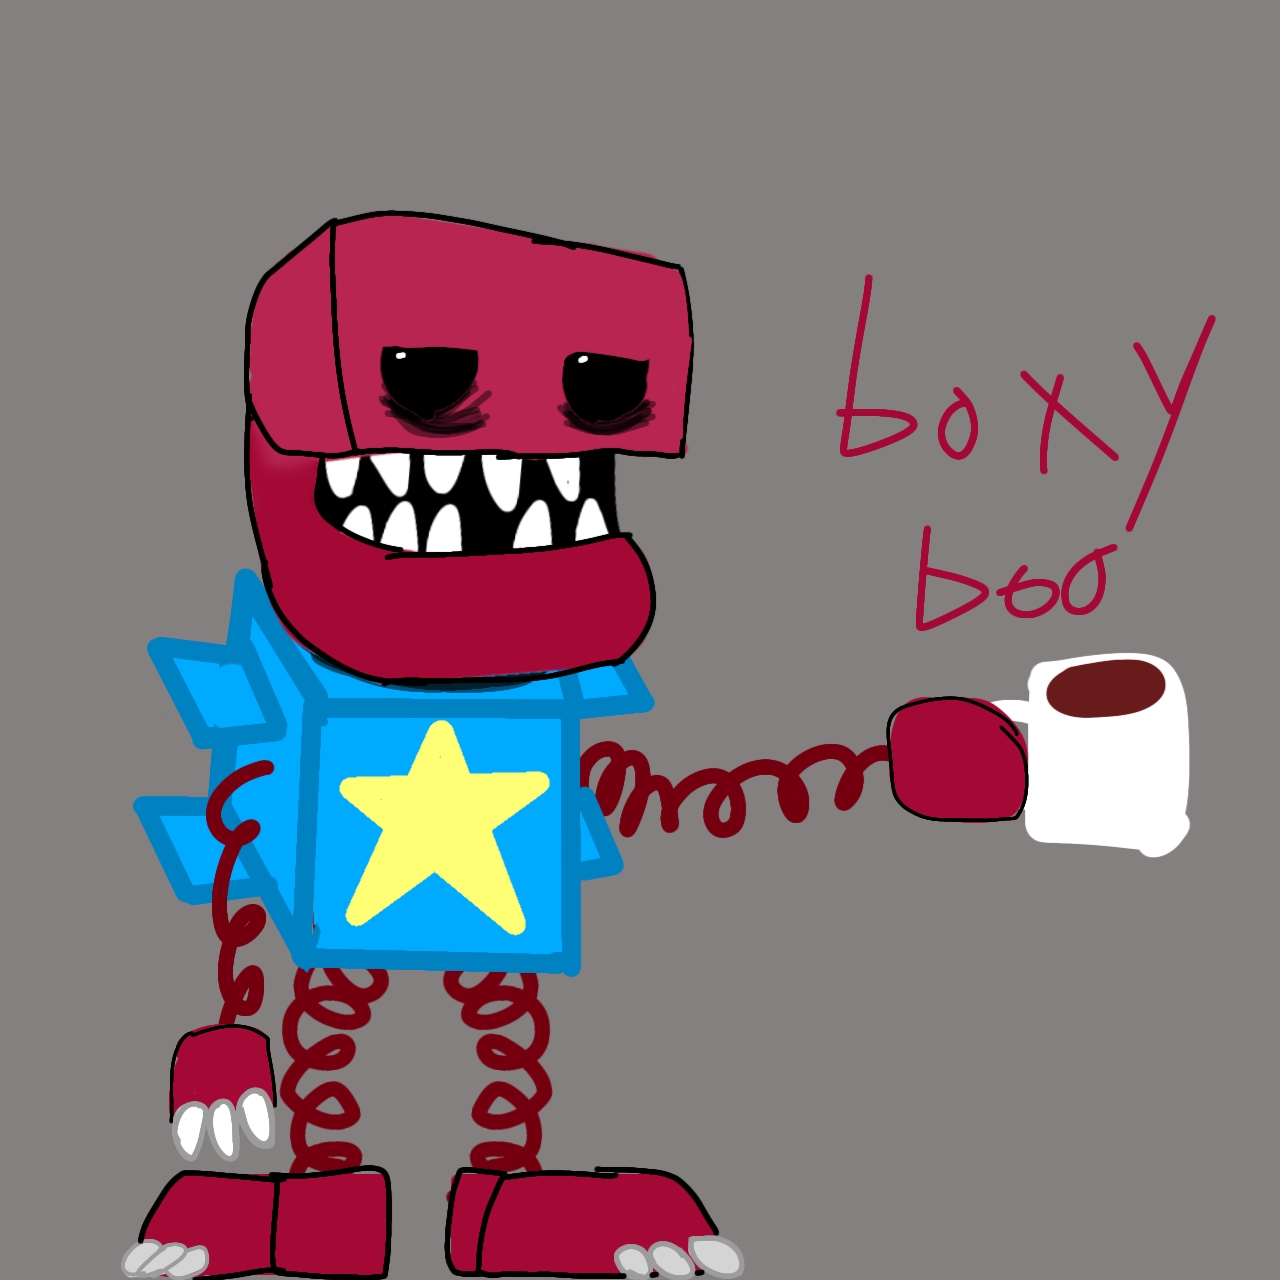 Boxy Boo (Old Art Remake) by Brotonto on Newgrounds